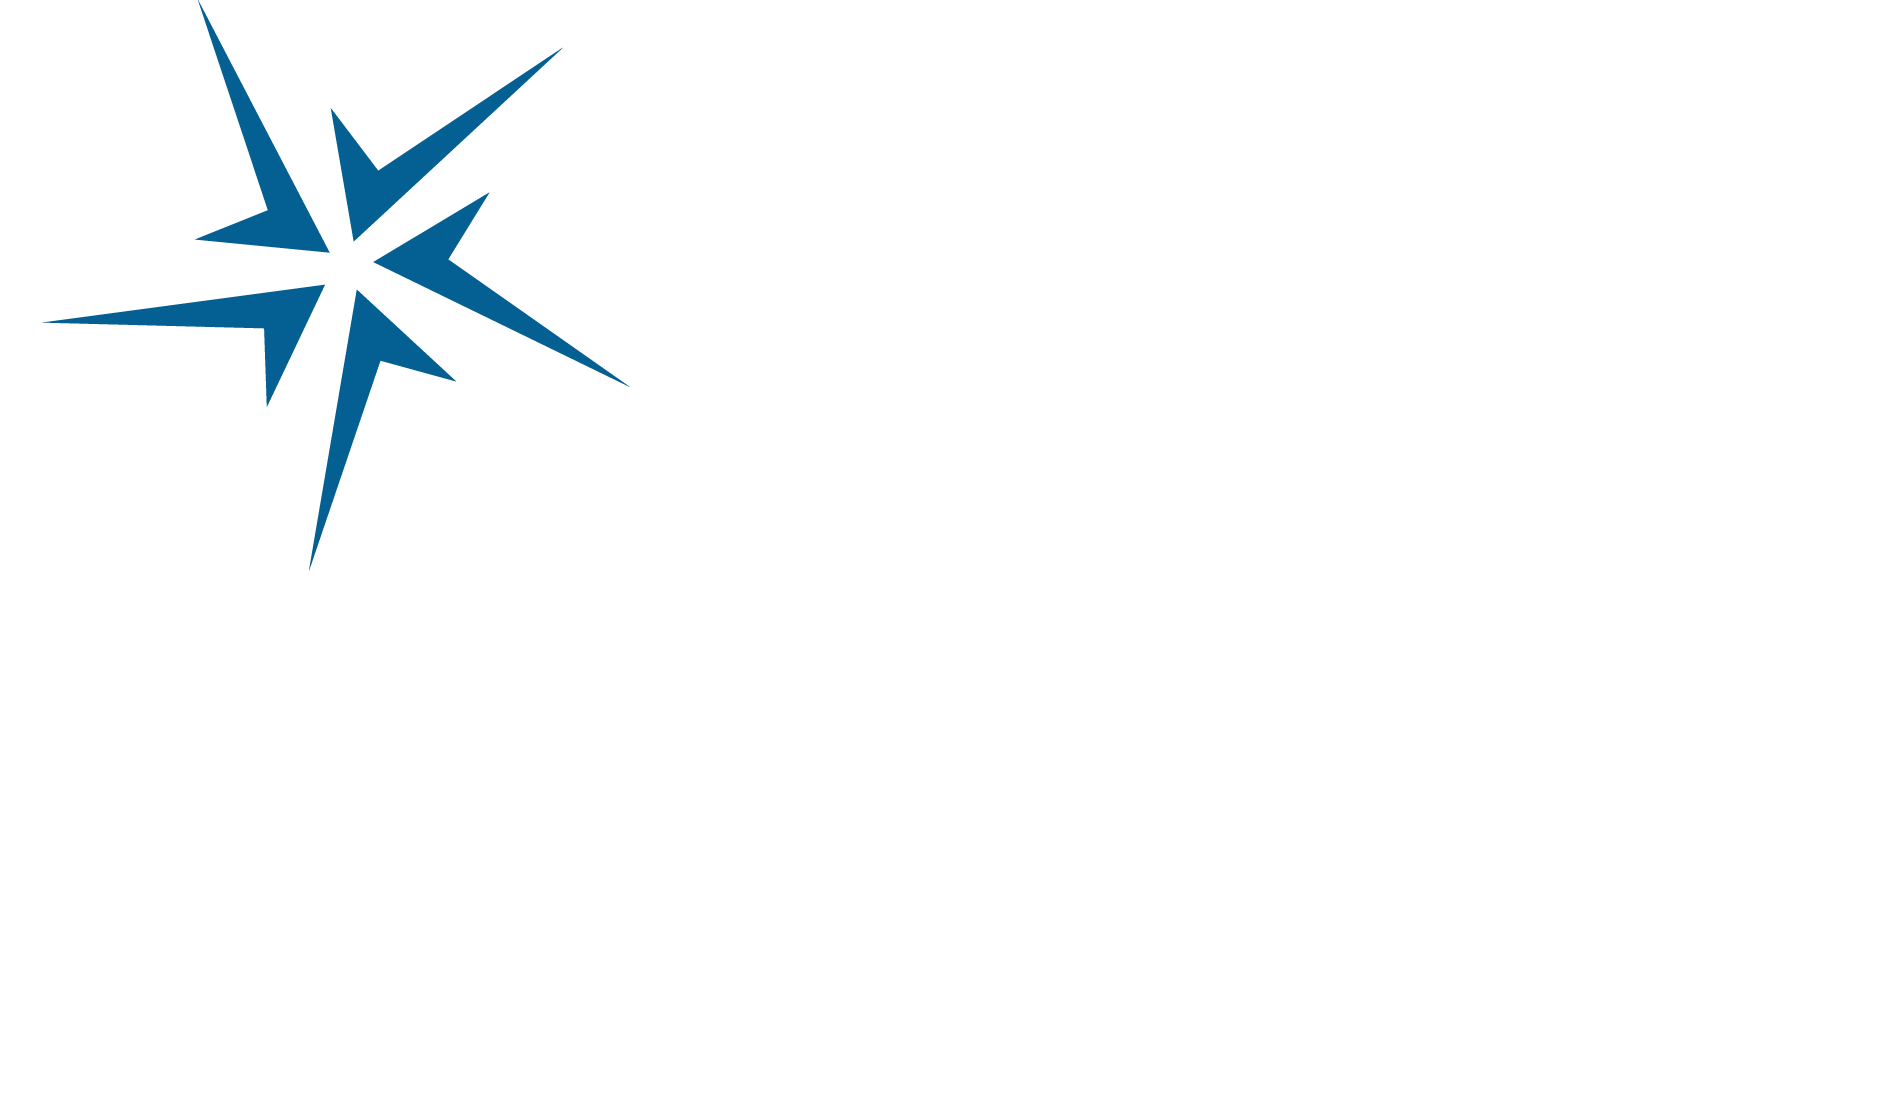 Southern Cross Computing